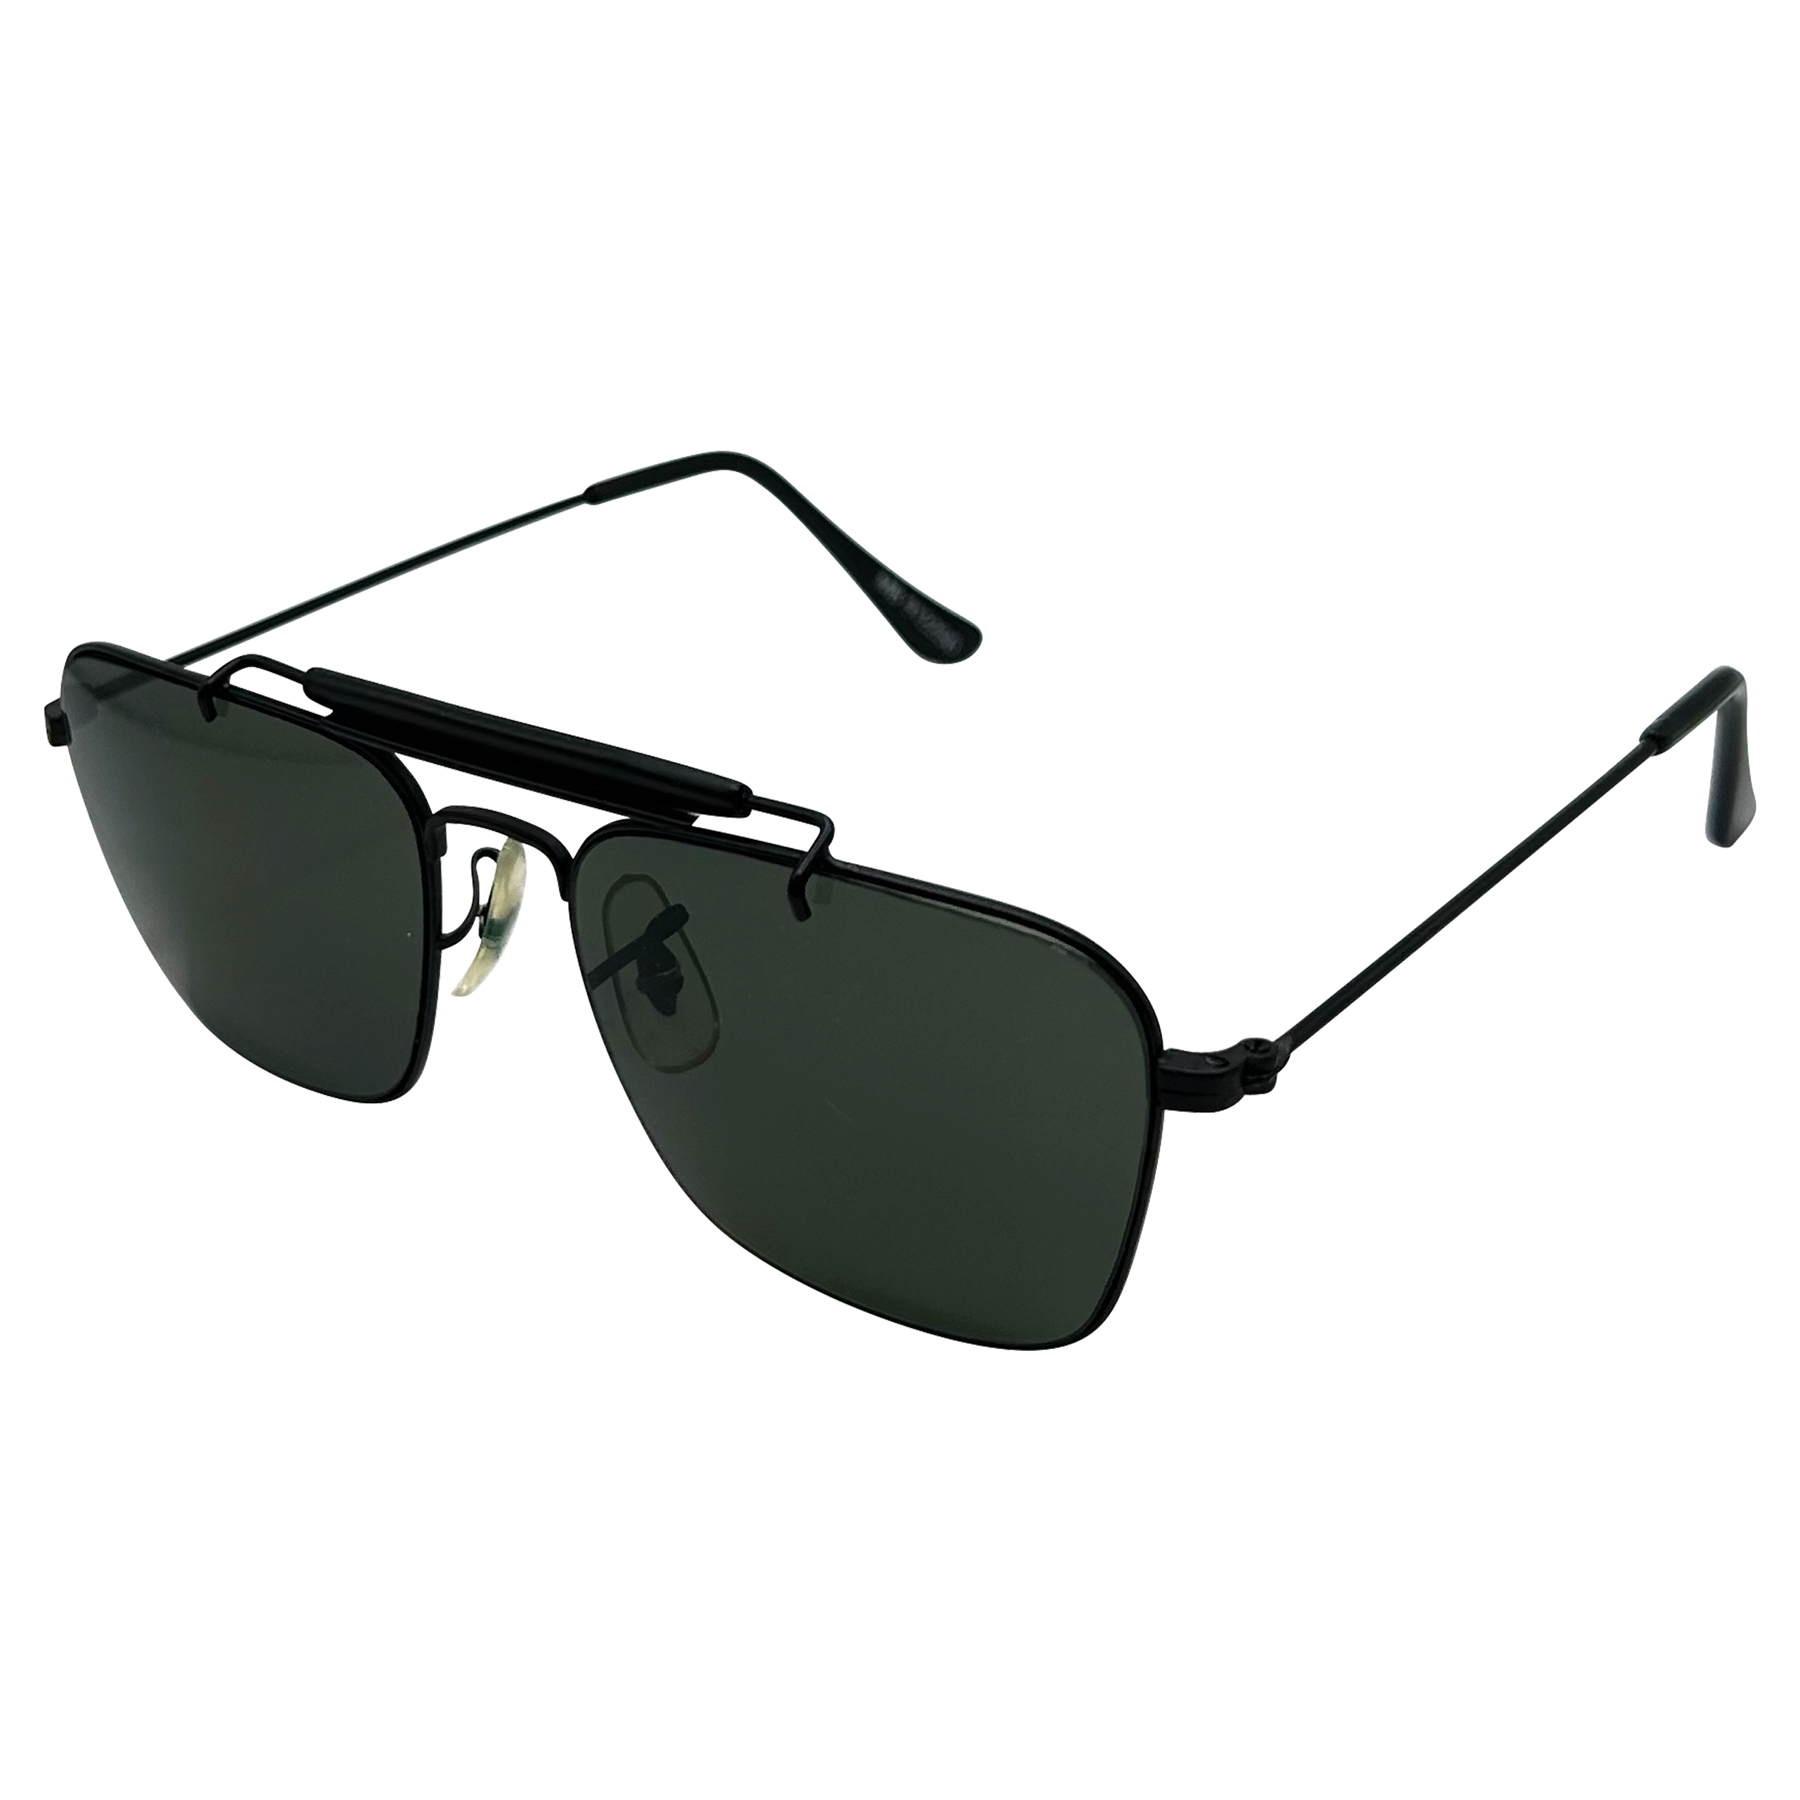 HEATH Aviator 90s Sunglasses